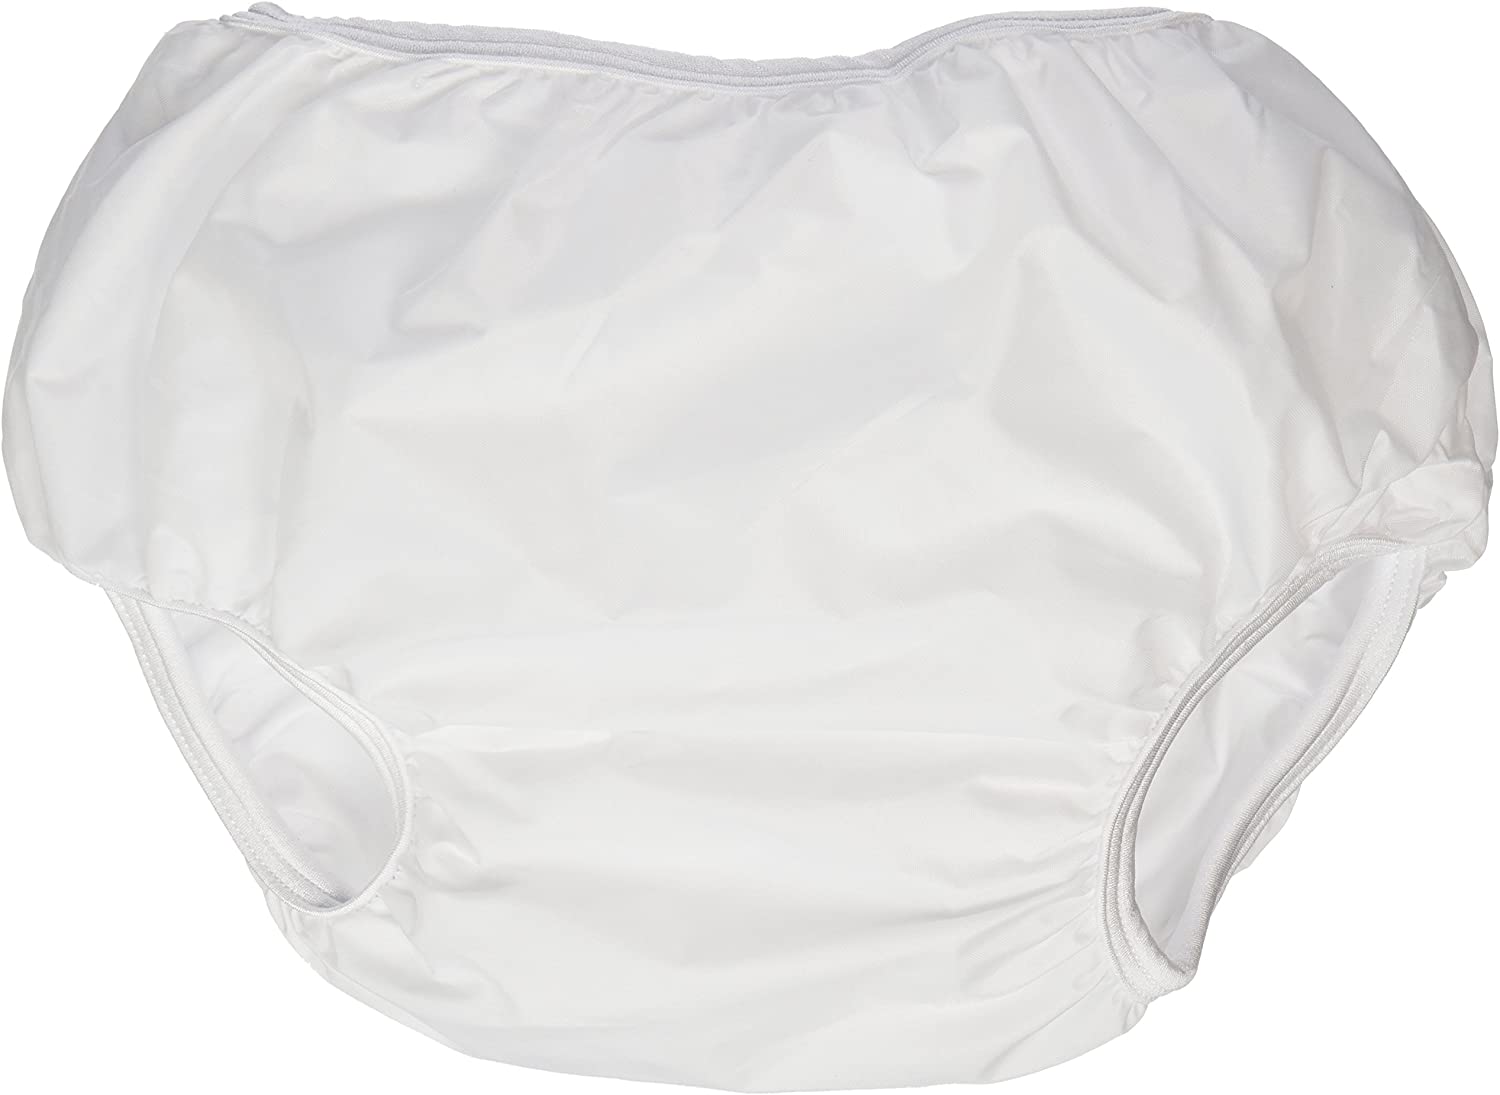 Dappi Waterproof 100% Nylon Diaper Pants, White, Small (2 Count)